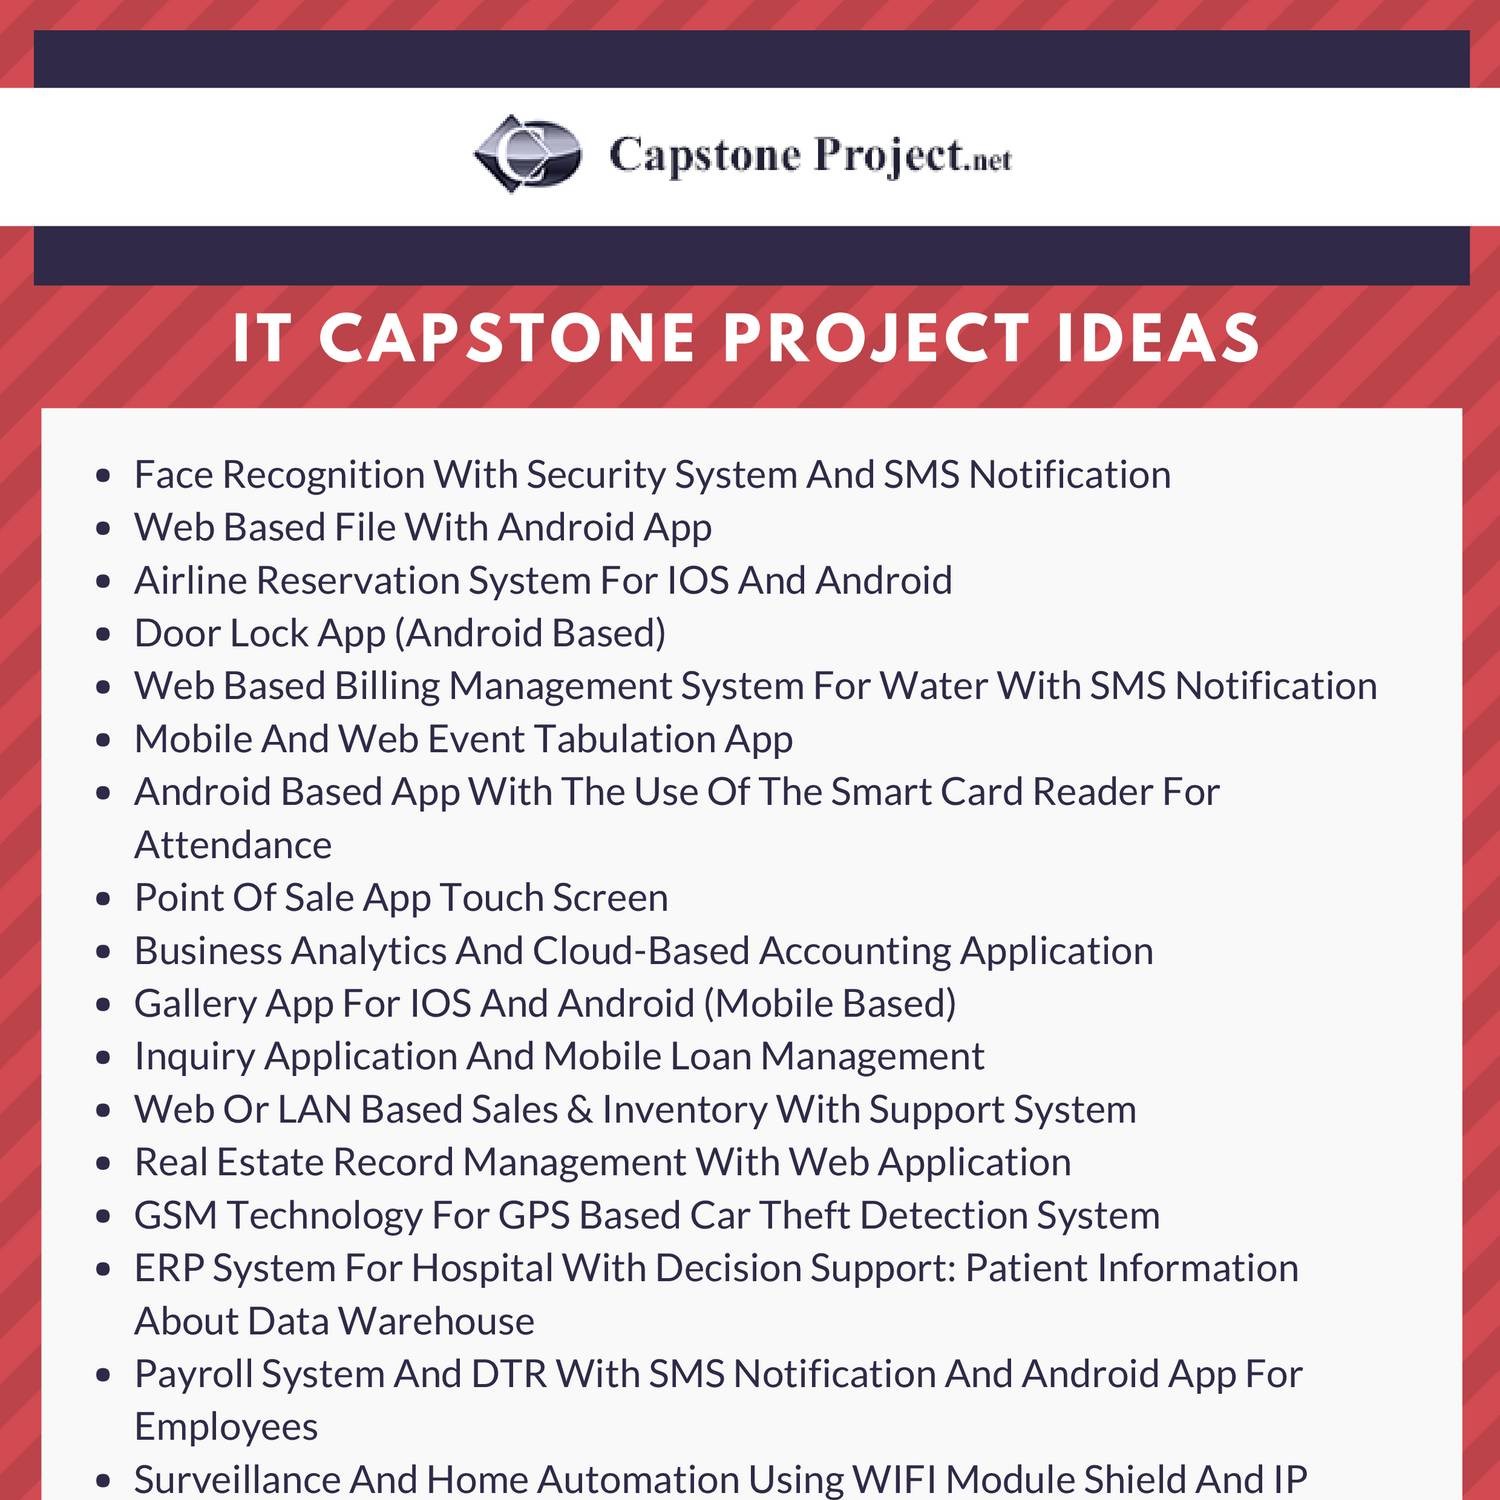 capstone project management system